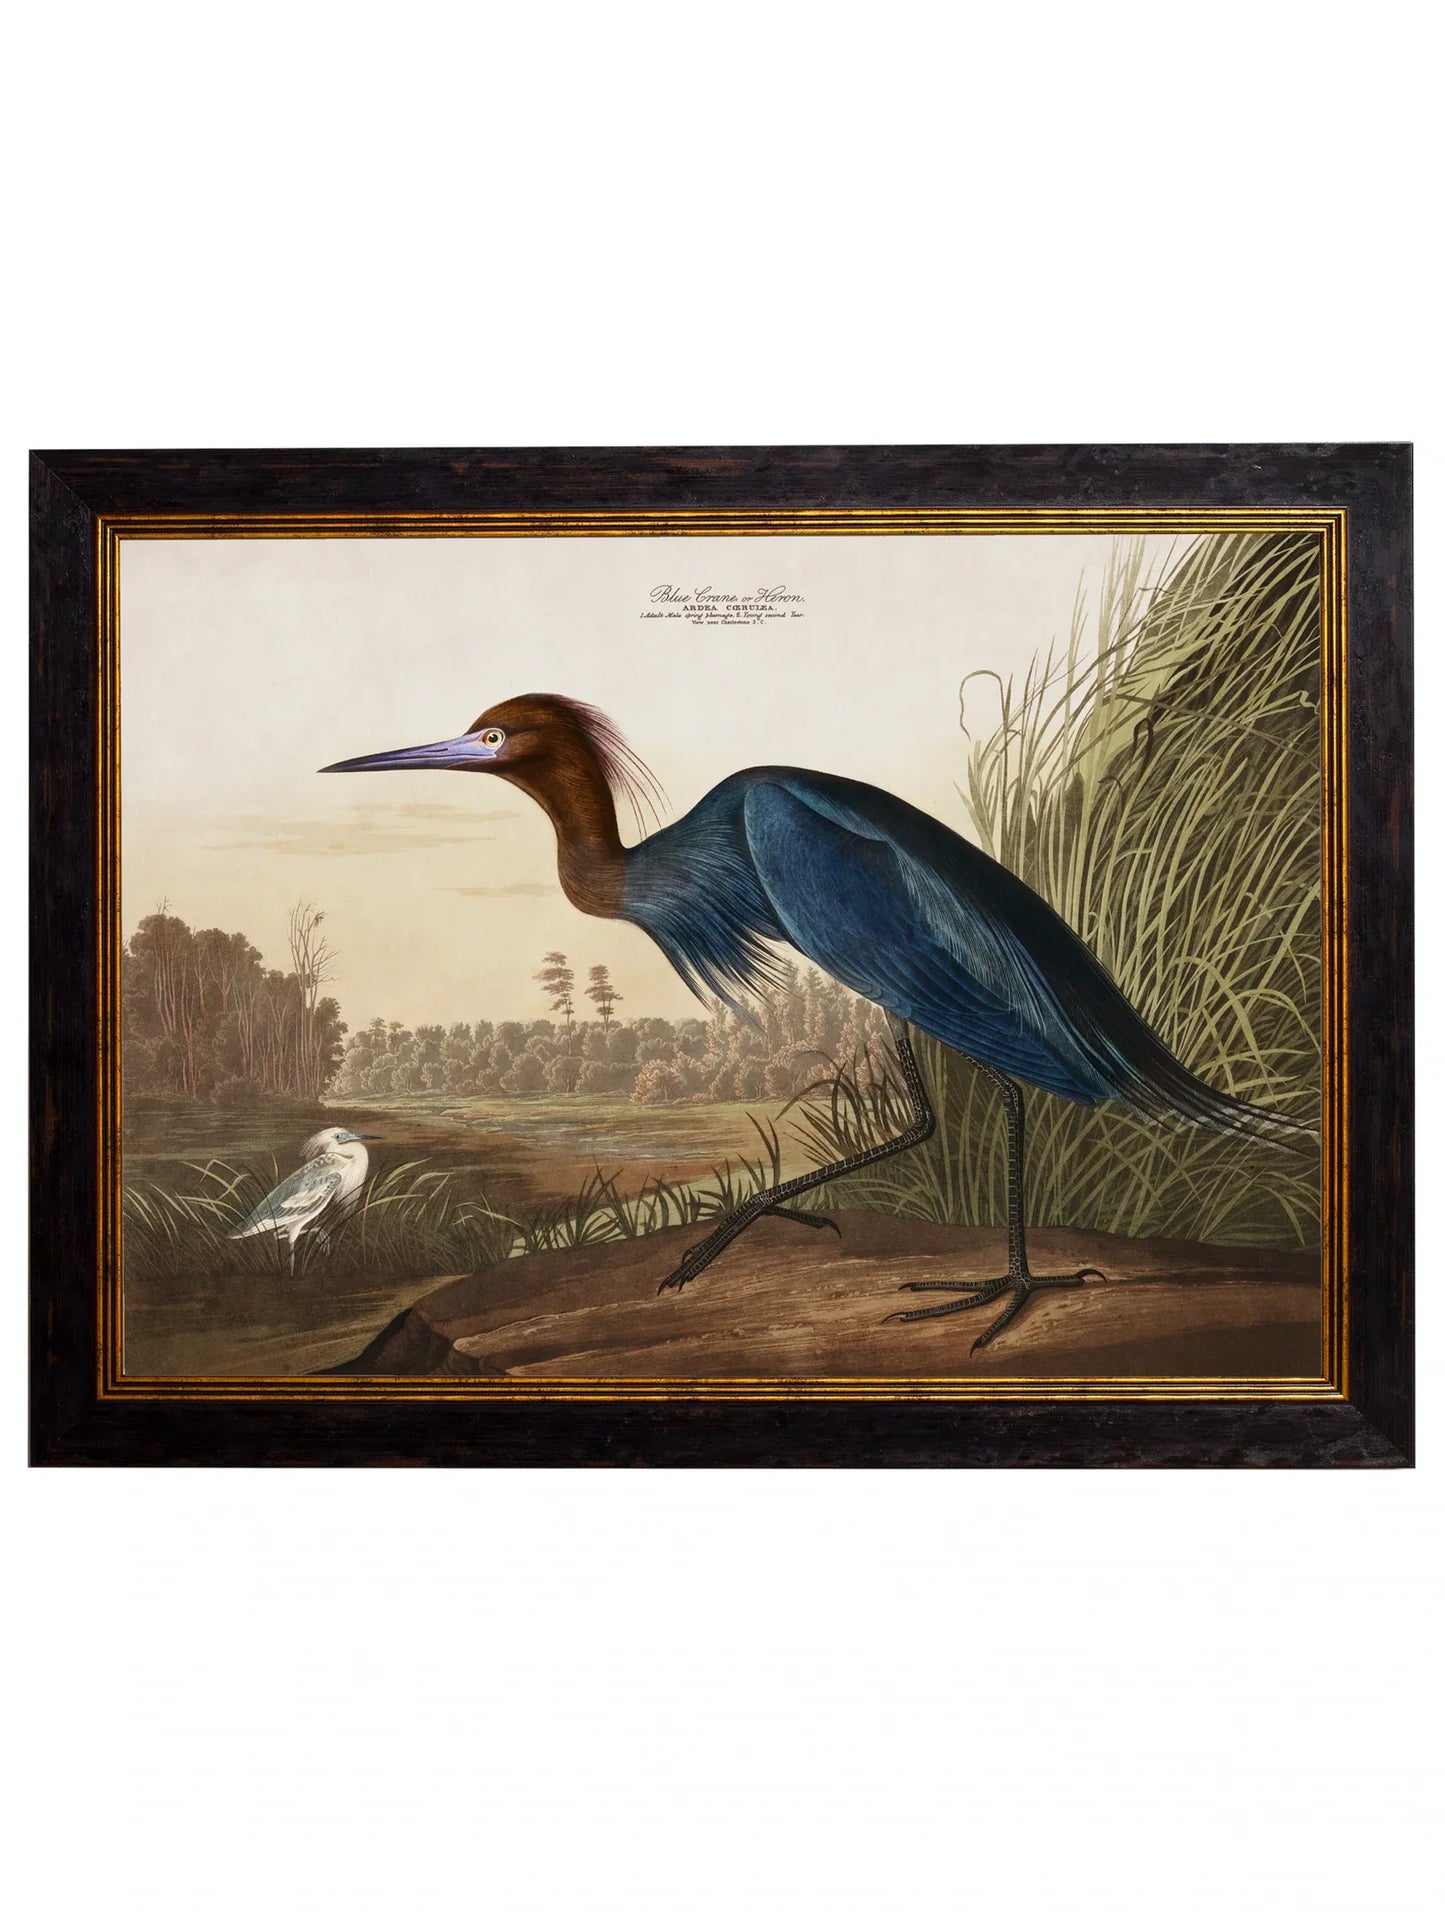 C.1838 Audubon's Herons Frames for sale - Woodcock and Cavendish